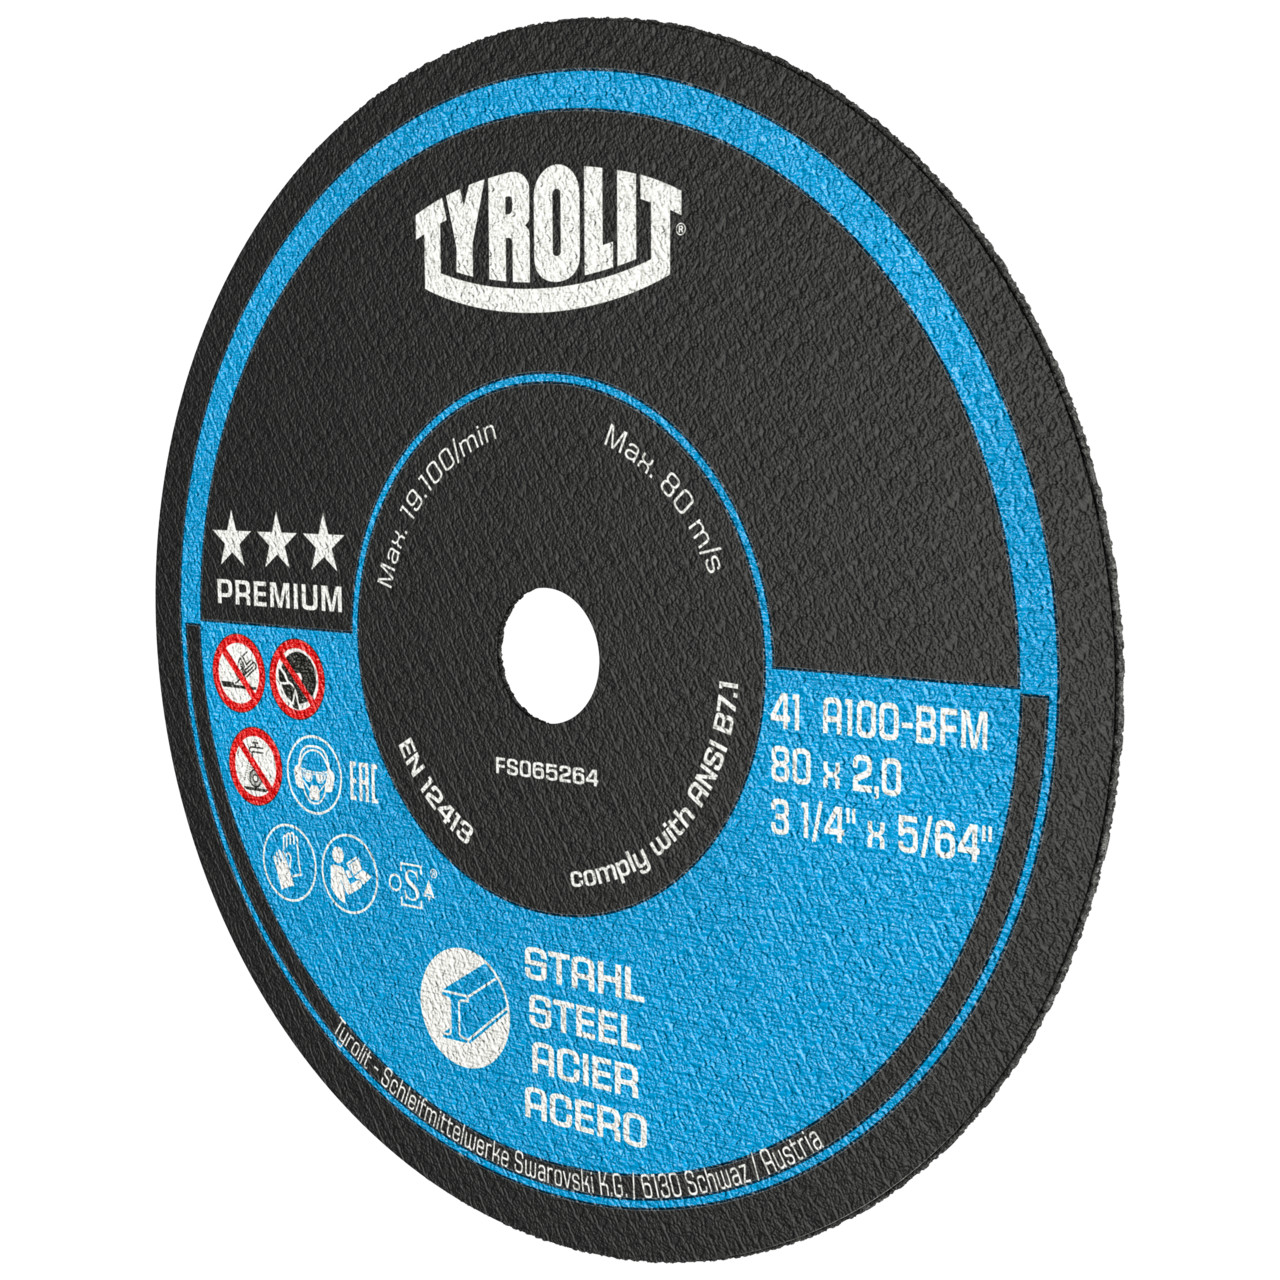 Tyrolit Cutting discs DxDxH 75x1x10 For steel, shape: 41 - straight version, Art. 325212